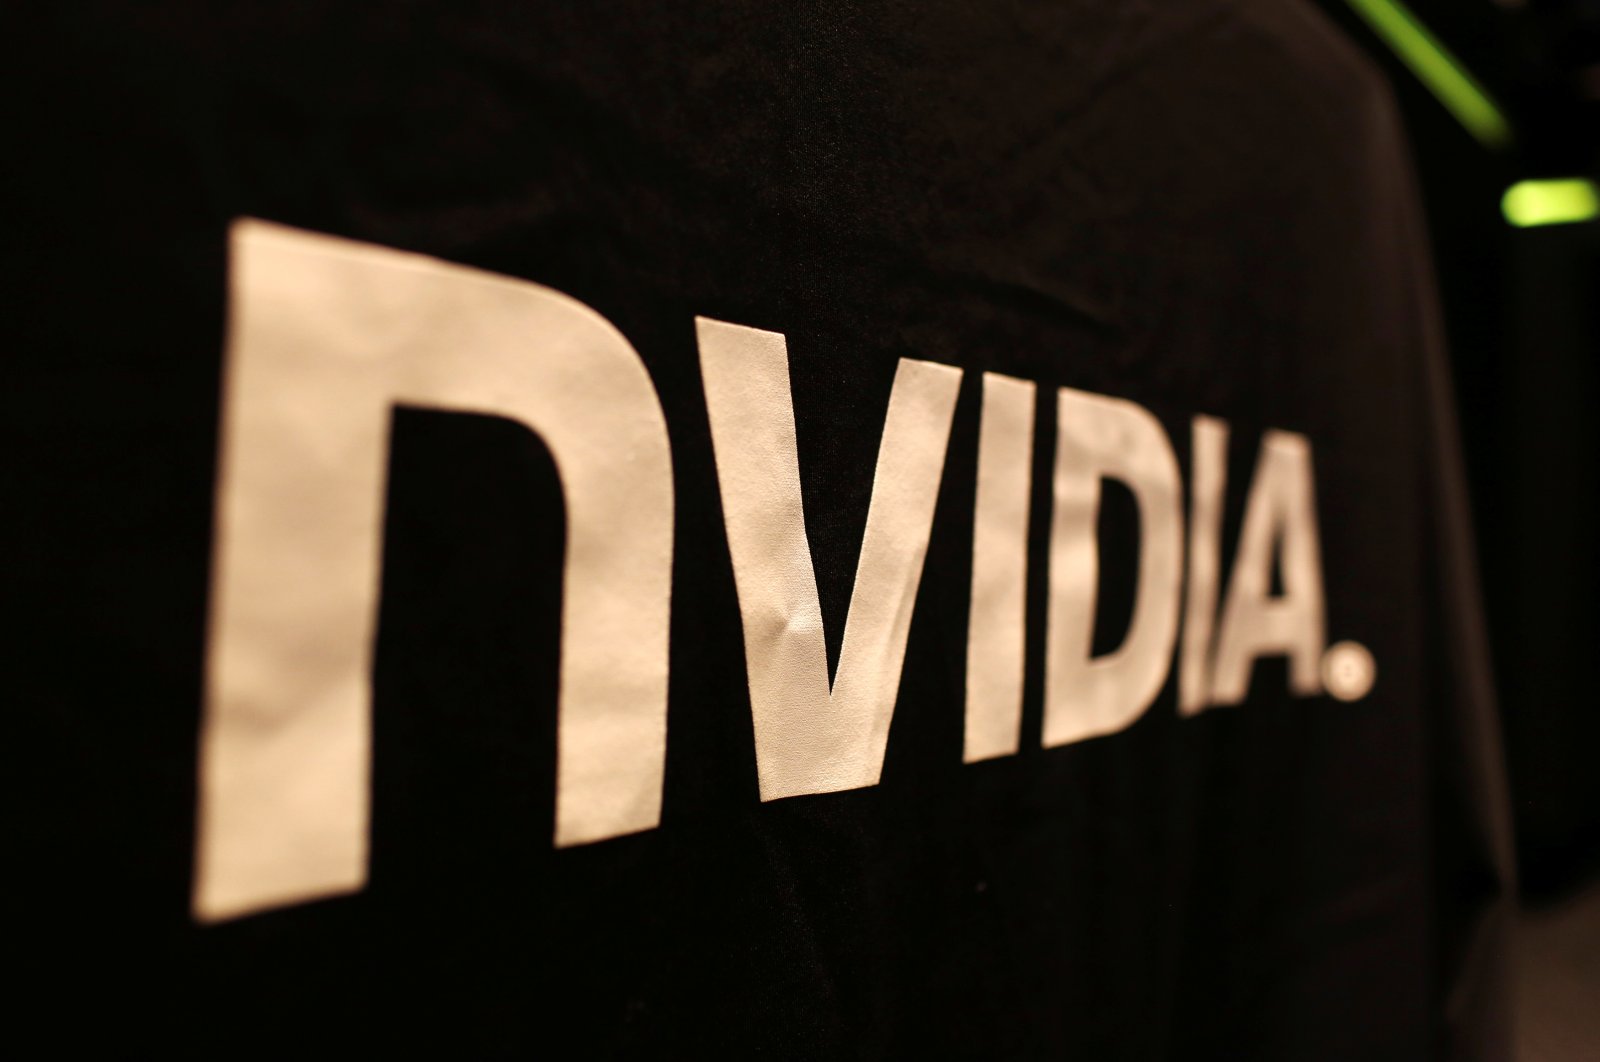 The logo of technology company Nvidia is seen at its headquarters in Santa Clara, California, U.S., Feb. 11, 2015. (REUTERS Photo)